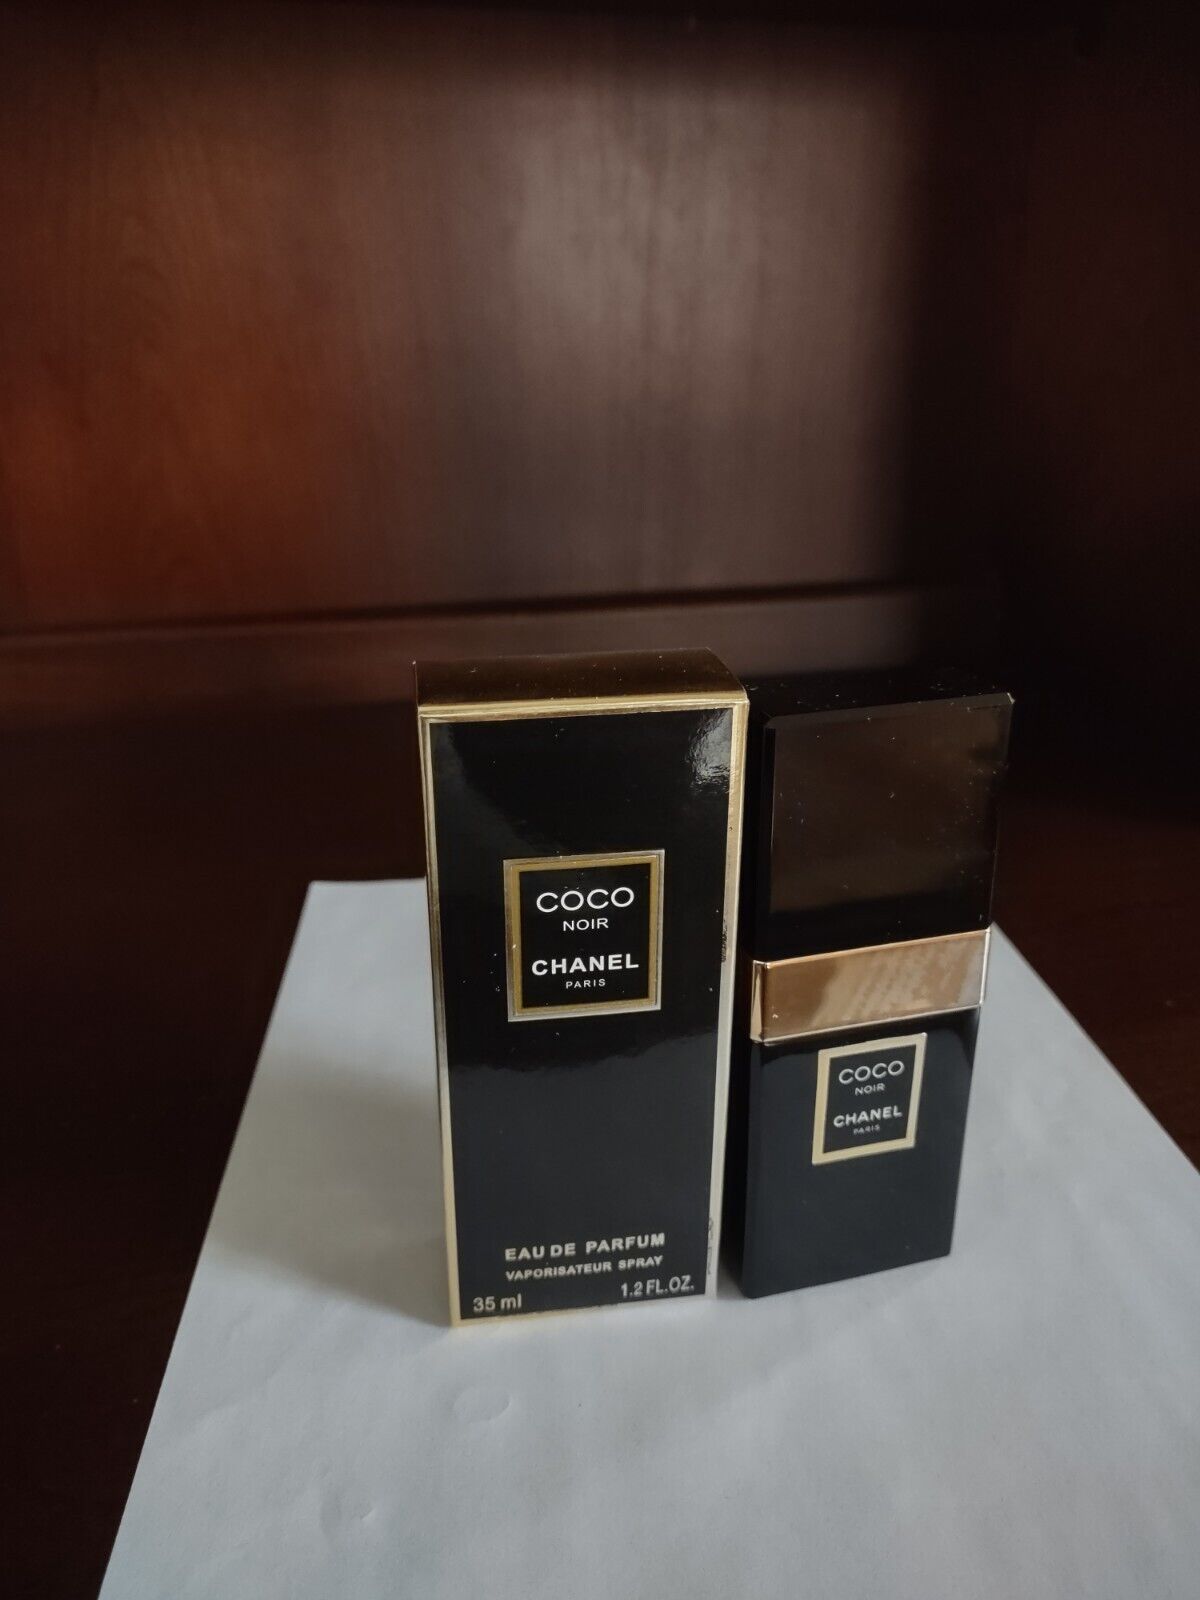 Coco Noir by Chanel Paris for Women 1.2 oz Eau de Parfum Perfume Spray New Box